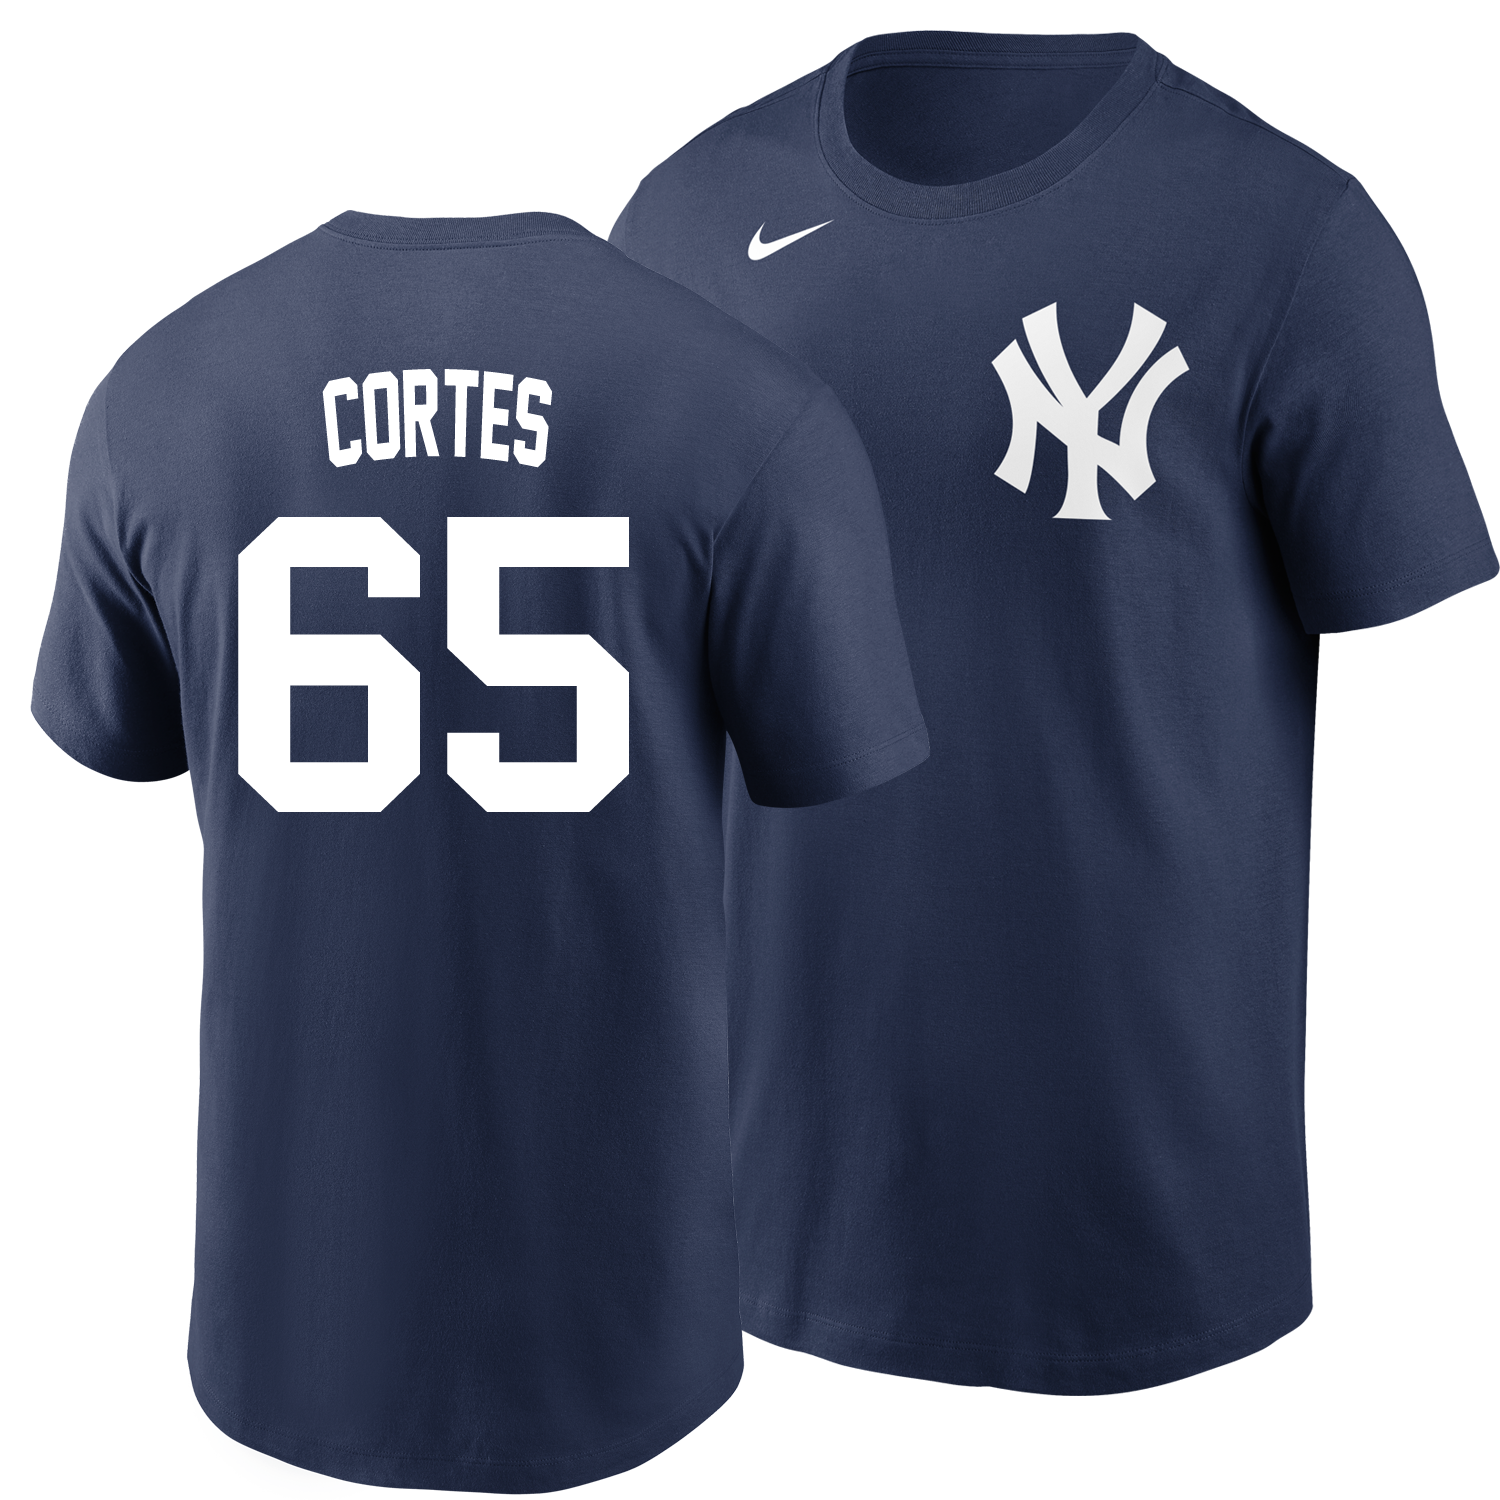 Nestor Cortes New York Yankees Kids Home Jersey by Nike